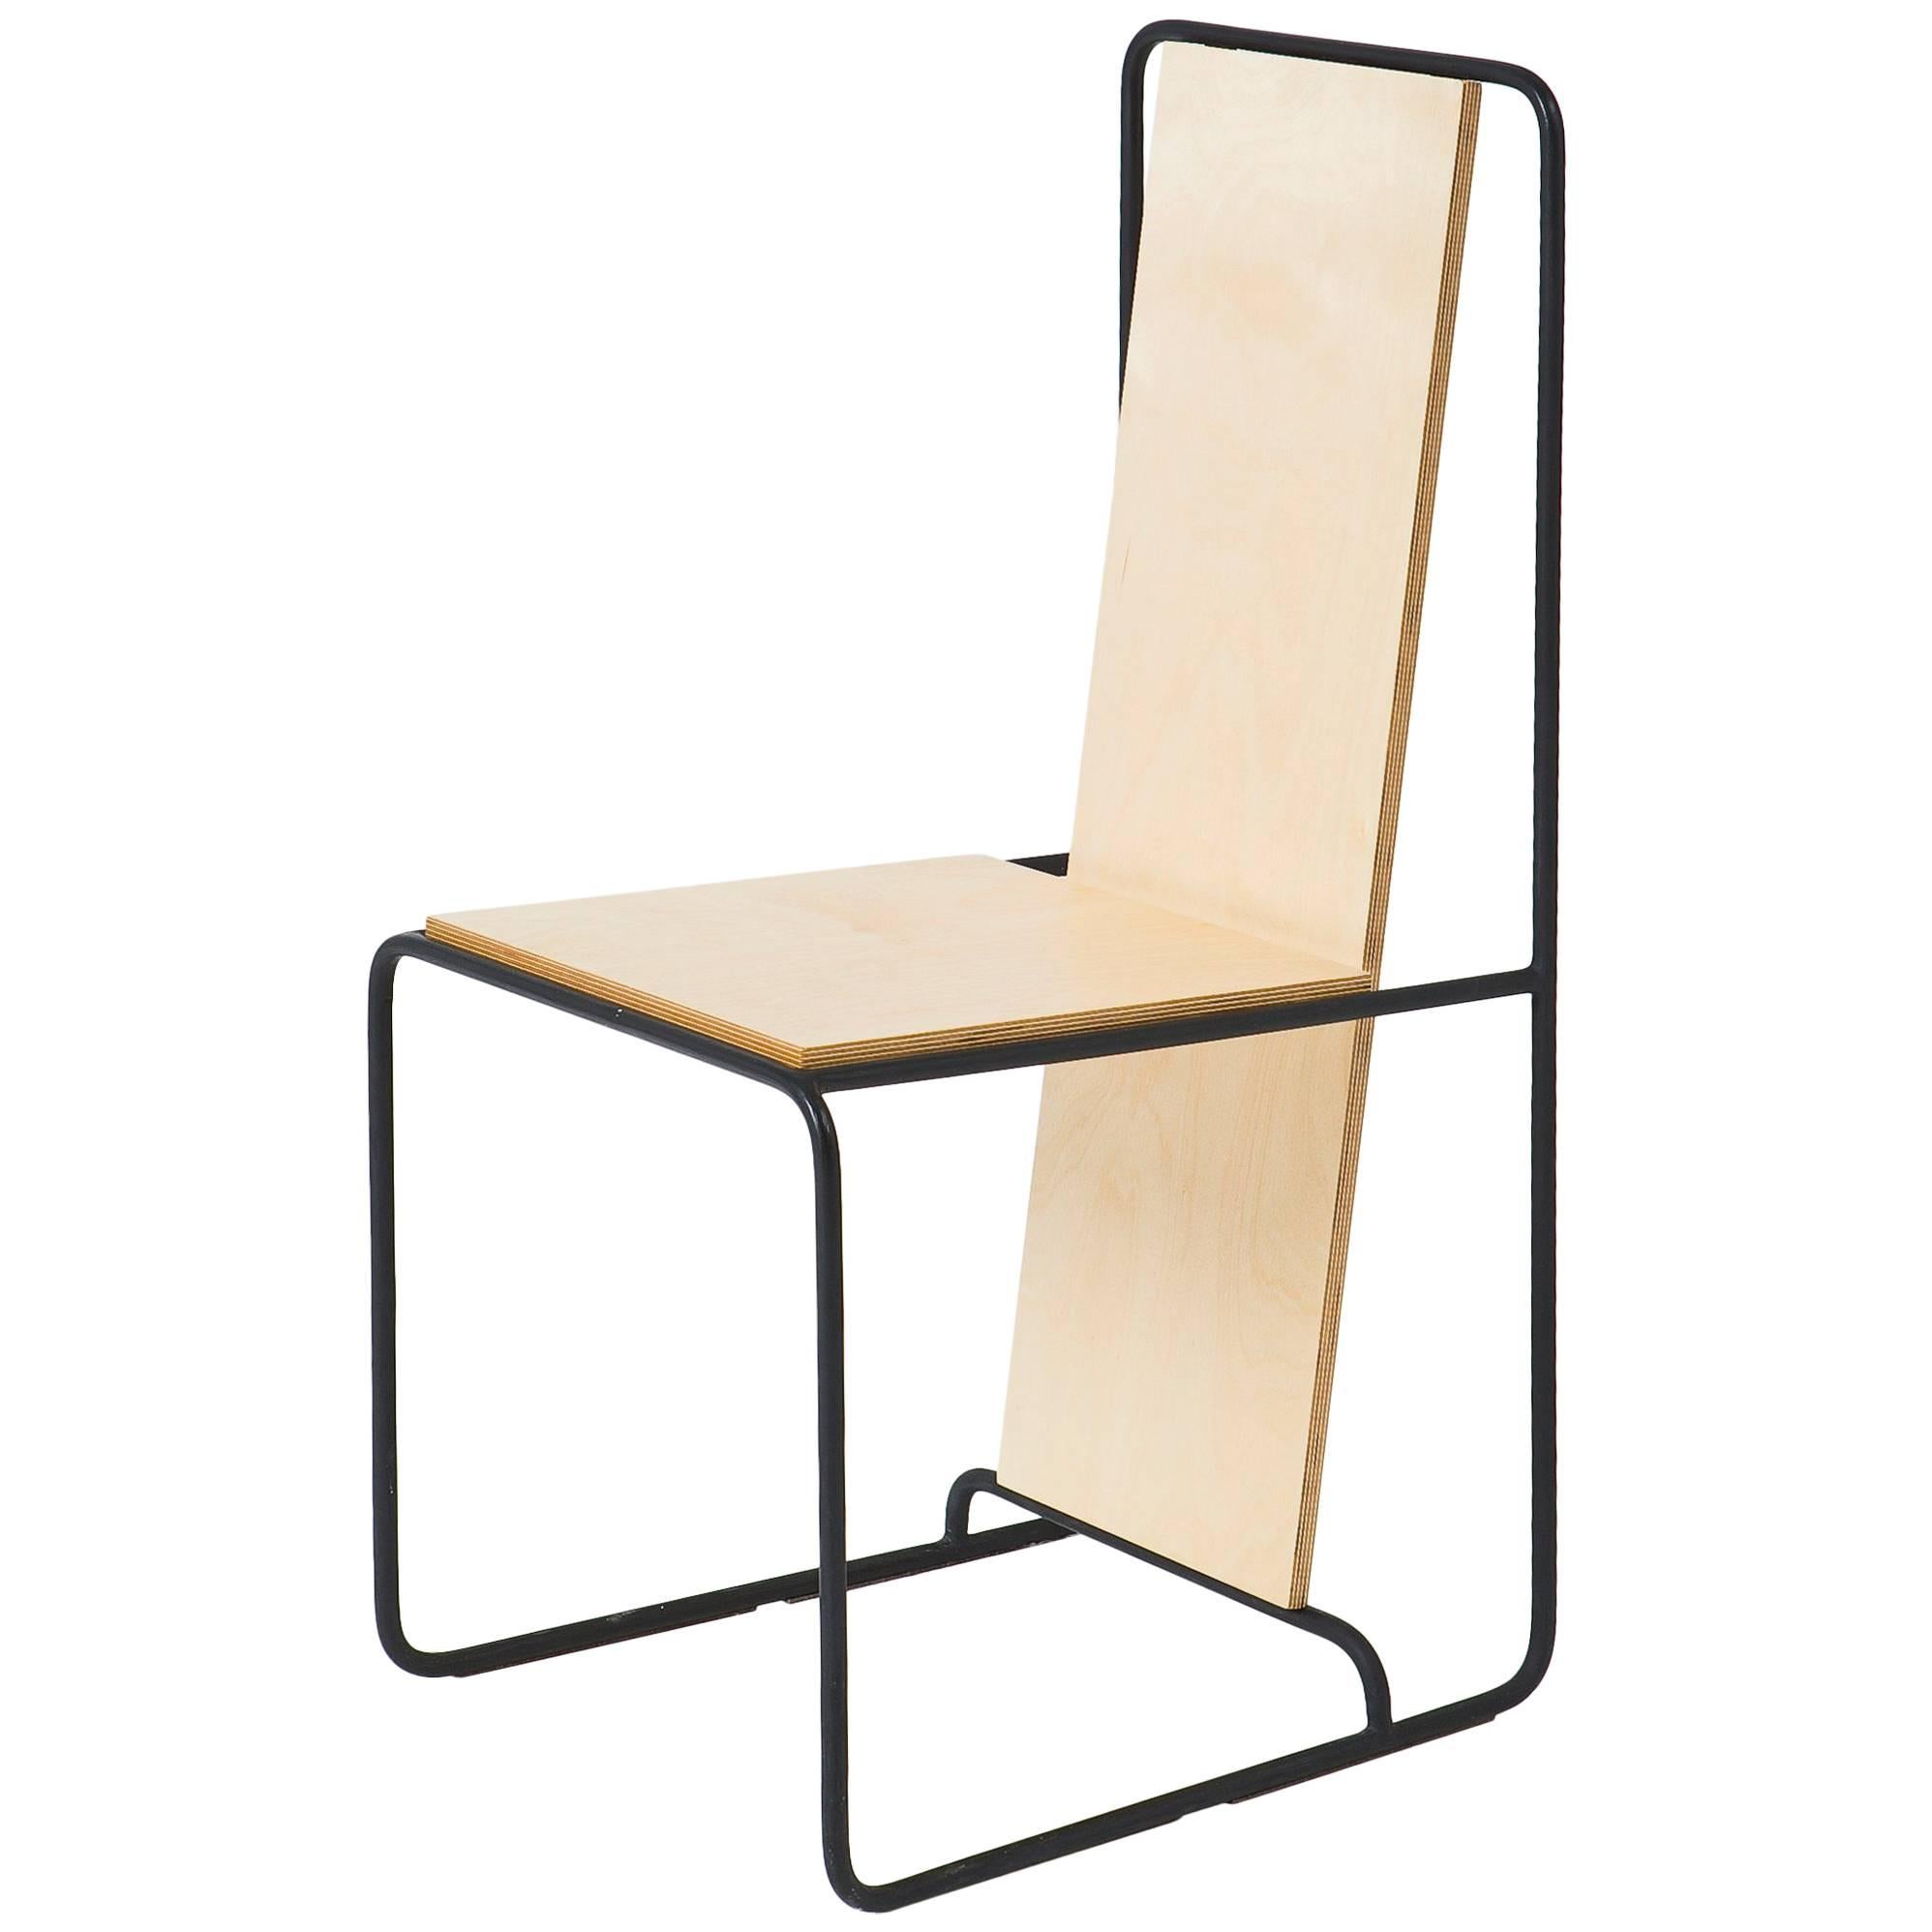 Line Chair 'Oak veneer and Metal structure' - Gerrit Rietveld inspiration